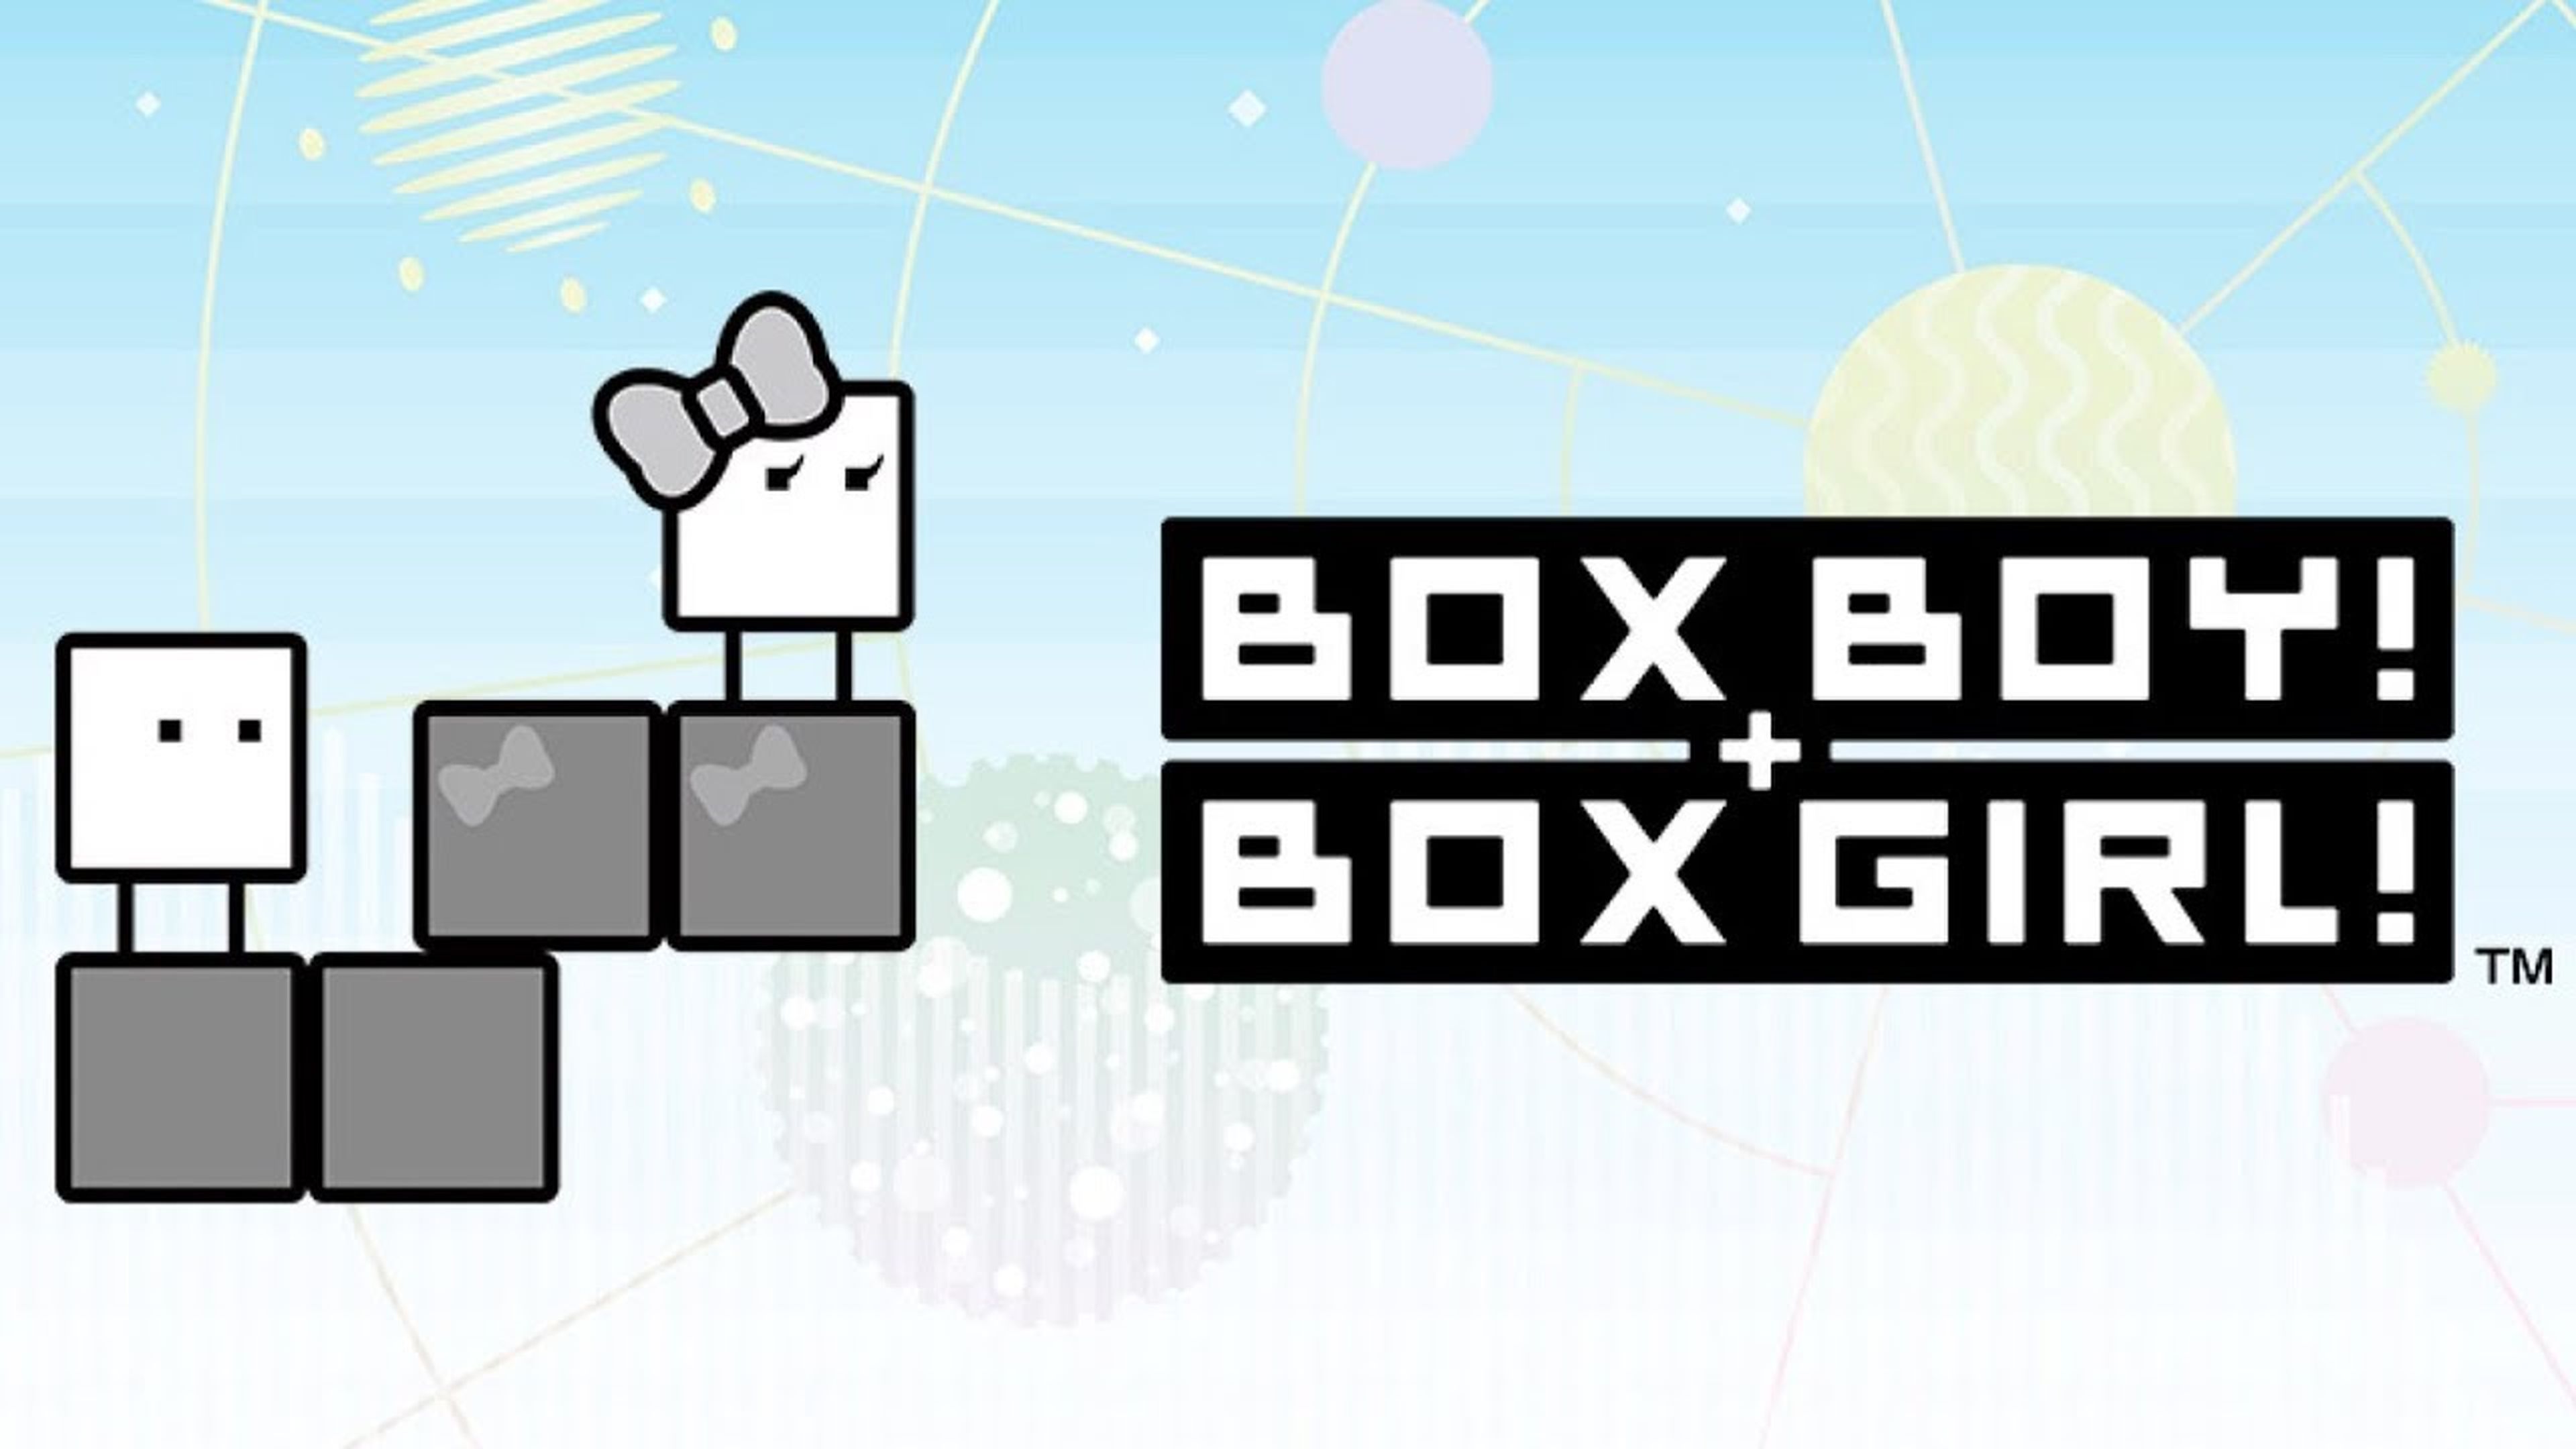 Boxboy + Boxgirl